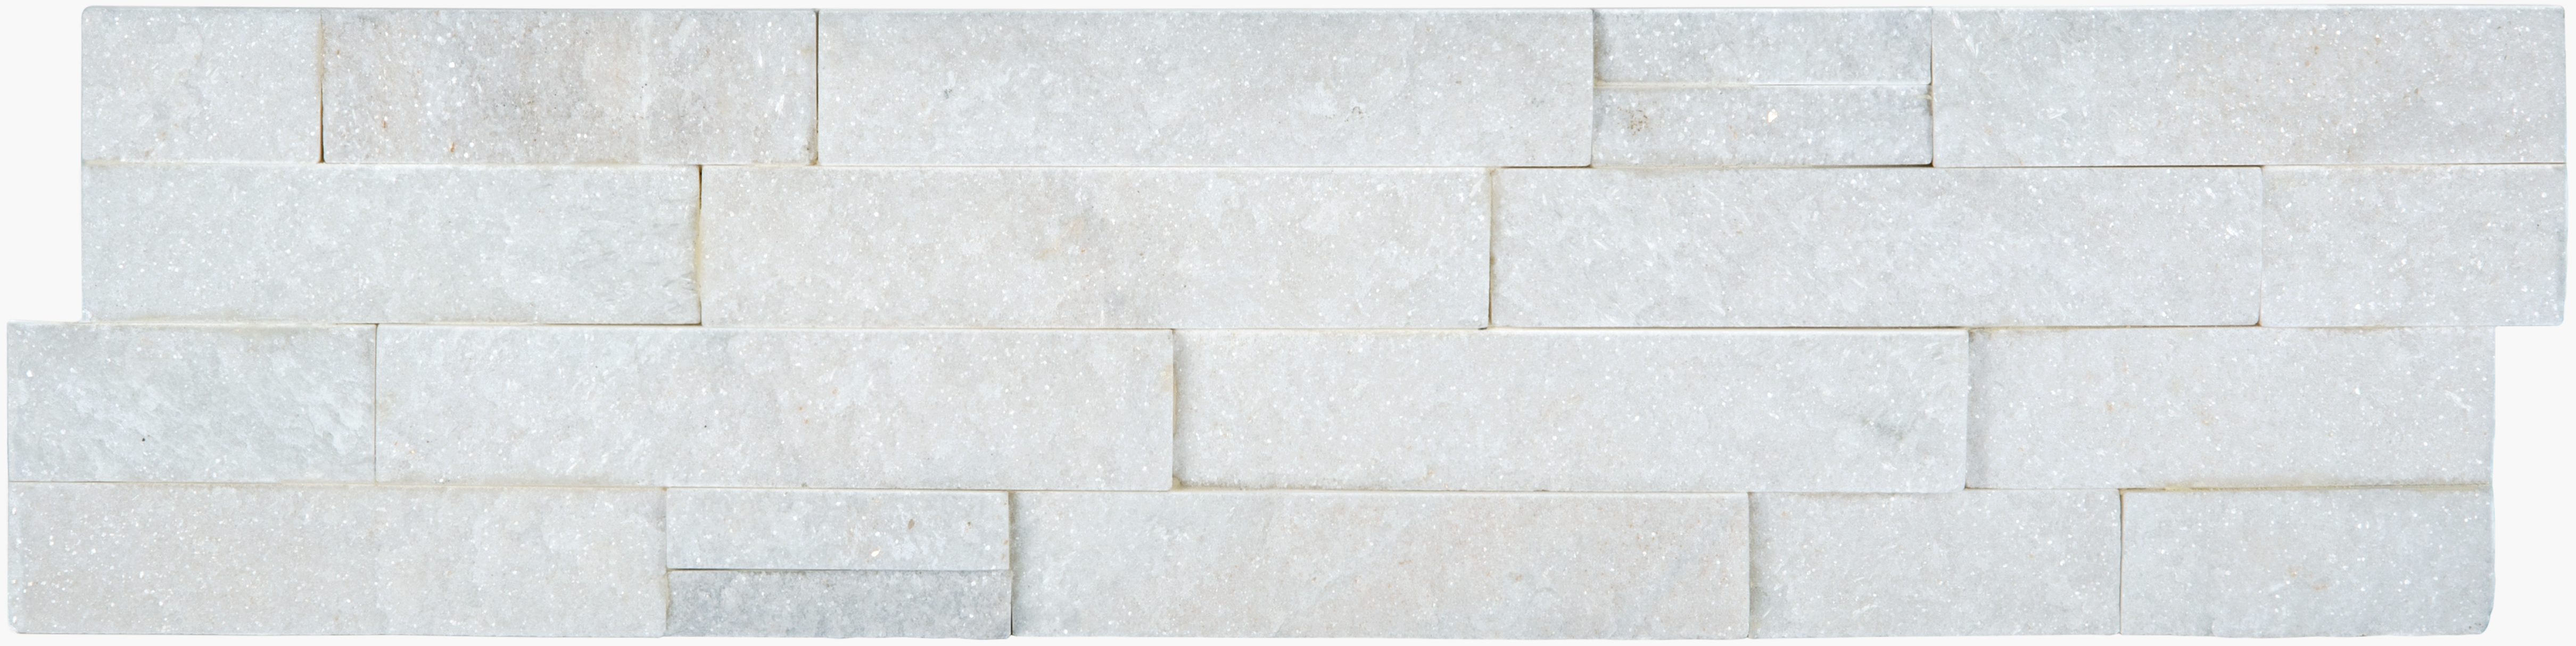 quartzite glacier pattern natural stone corner shelf molding from ledger stone anatolia collection distributed by surface group international split face finish straight edge edge 6x24 bar shape